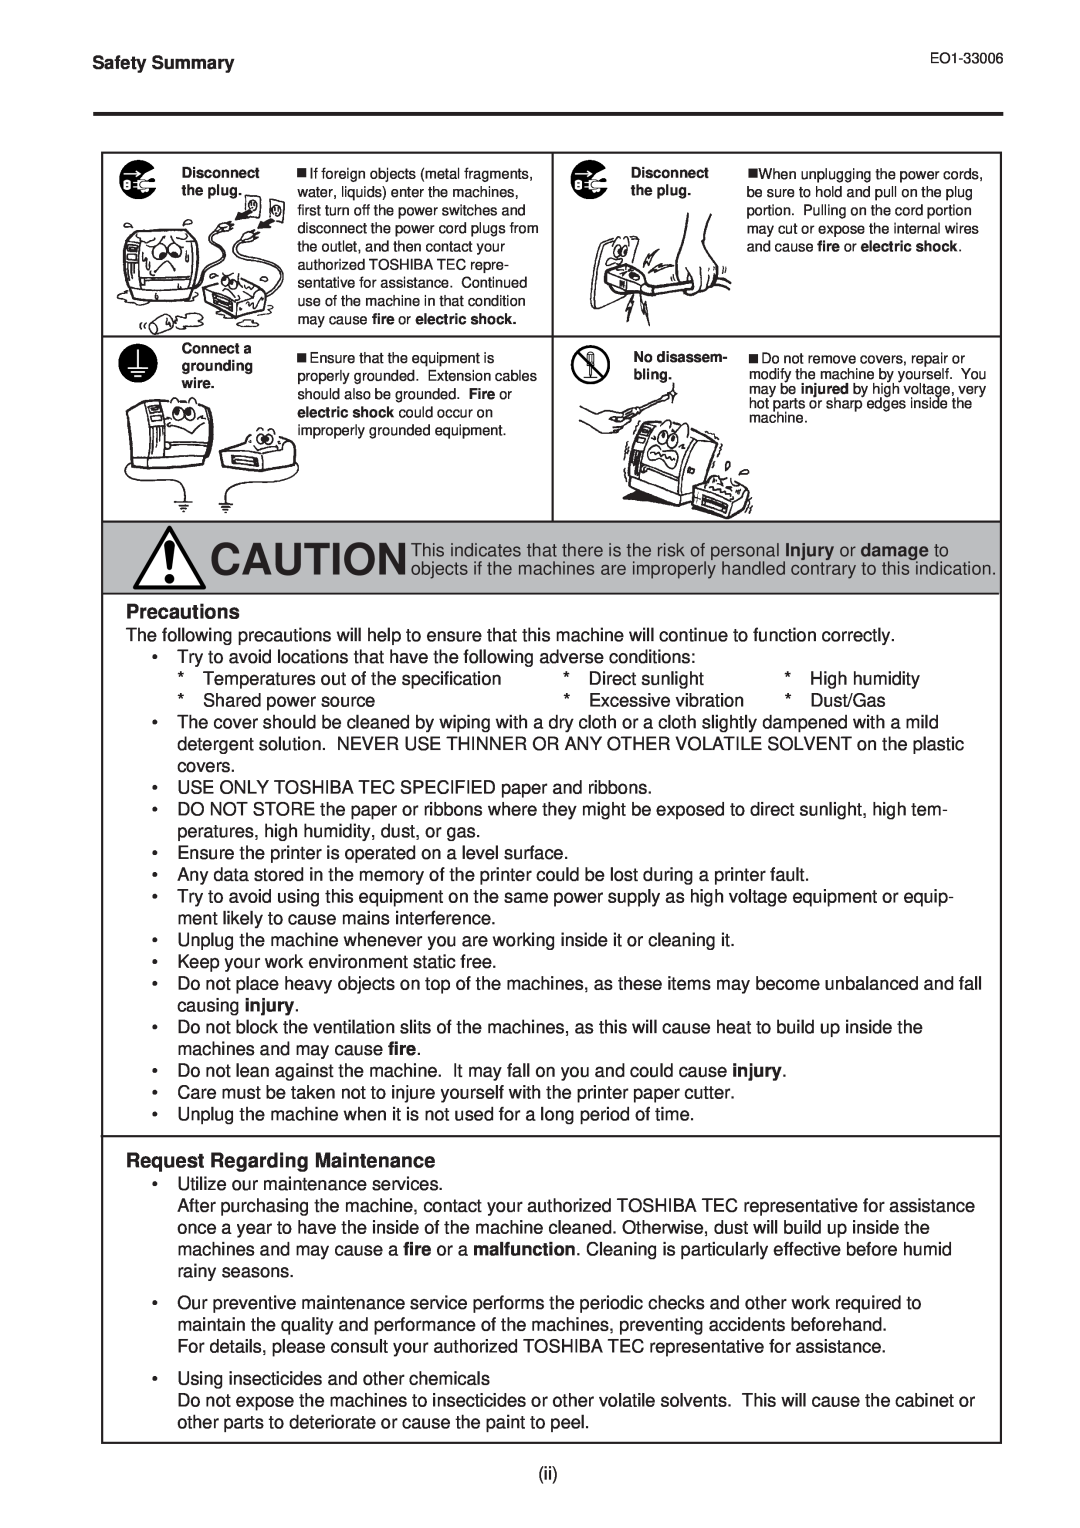 Toshiba B-450-QQ owner manual Precautions, Request Regarding Maintenance, Safety Summary 